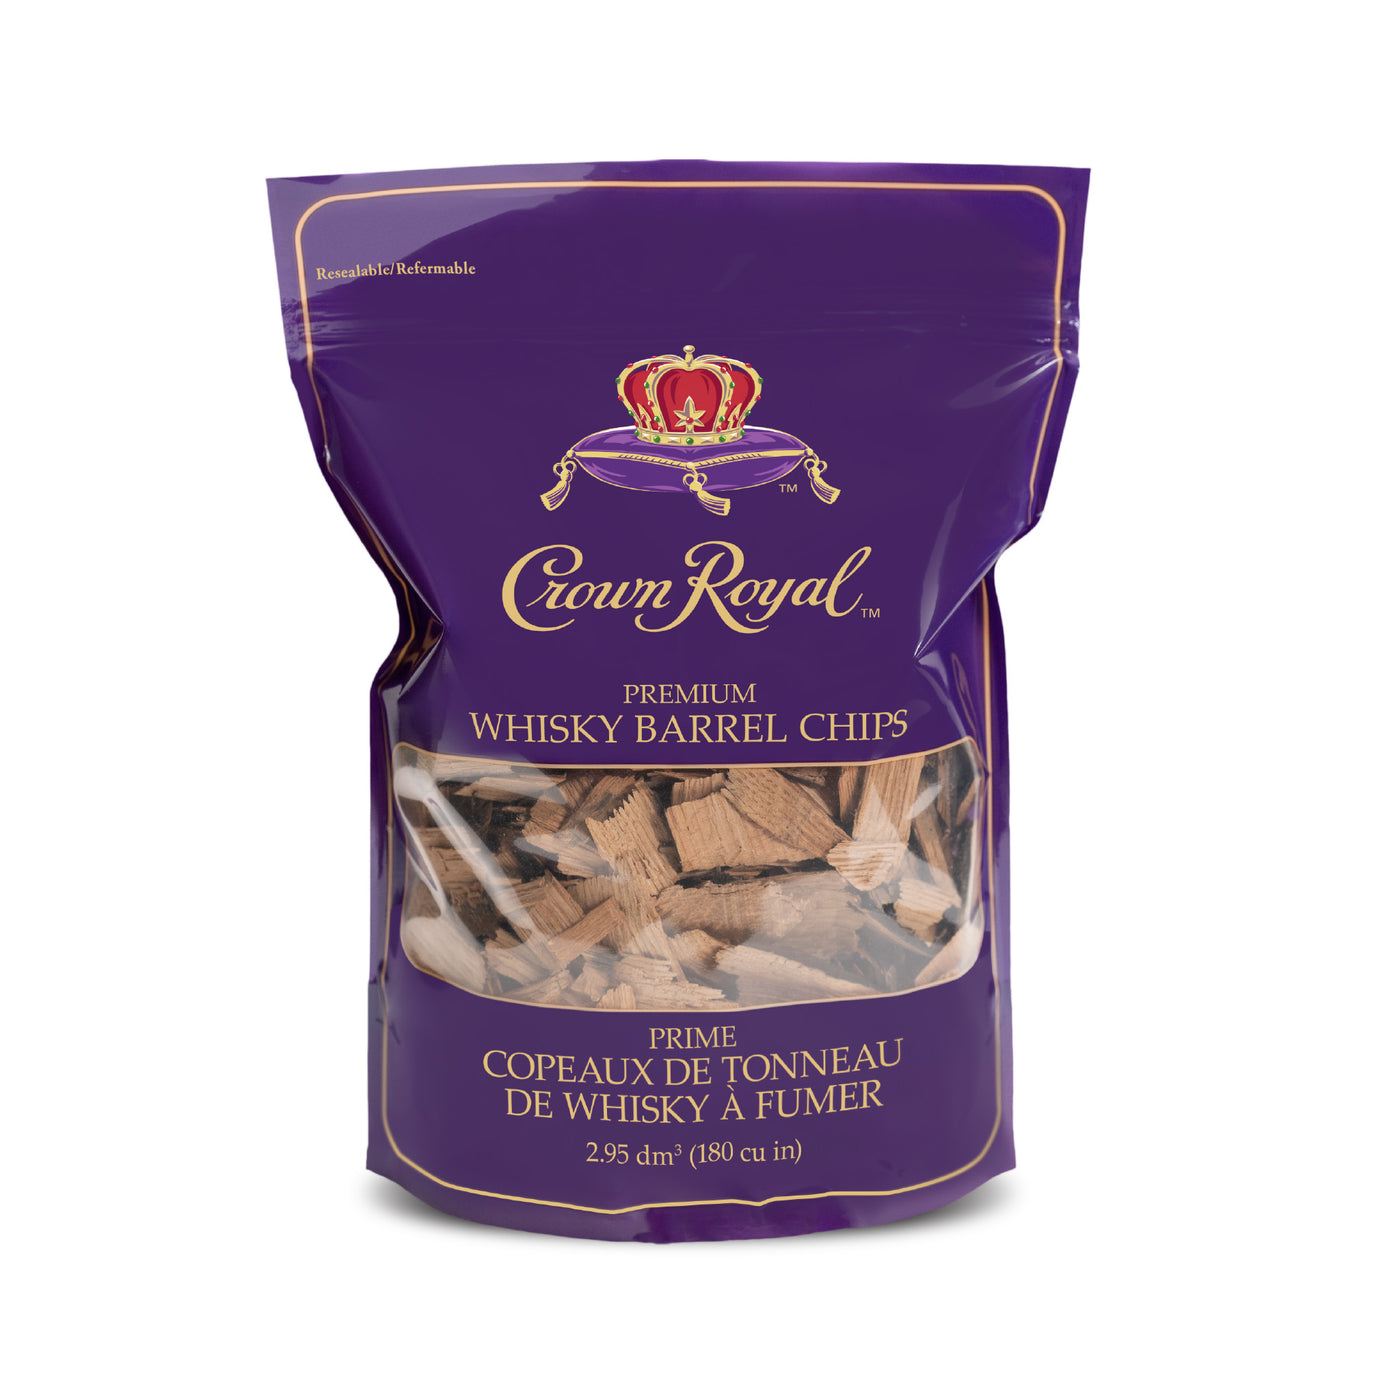 Crown Royal Premium Whisky Barrel Chips